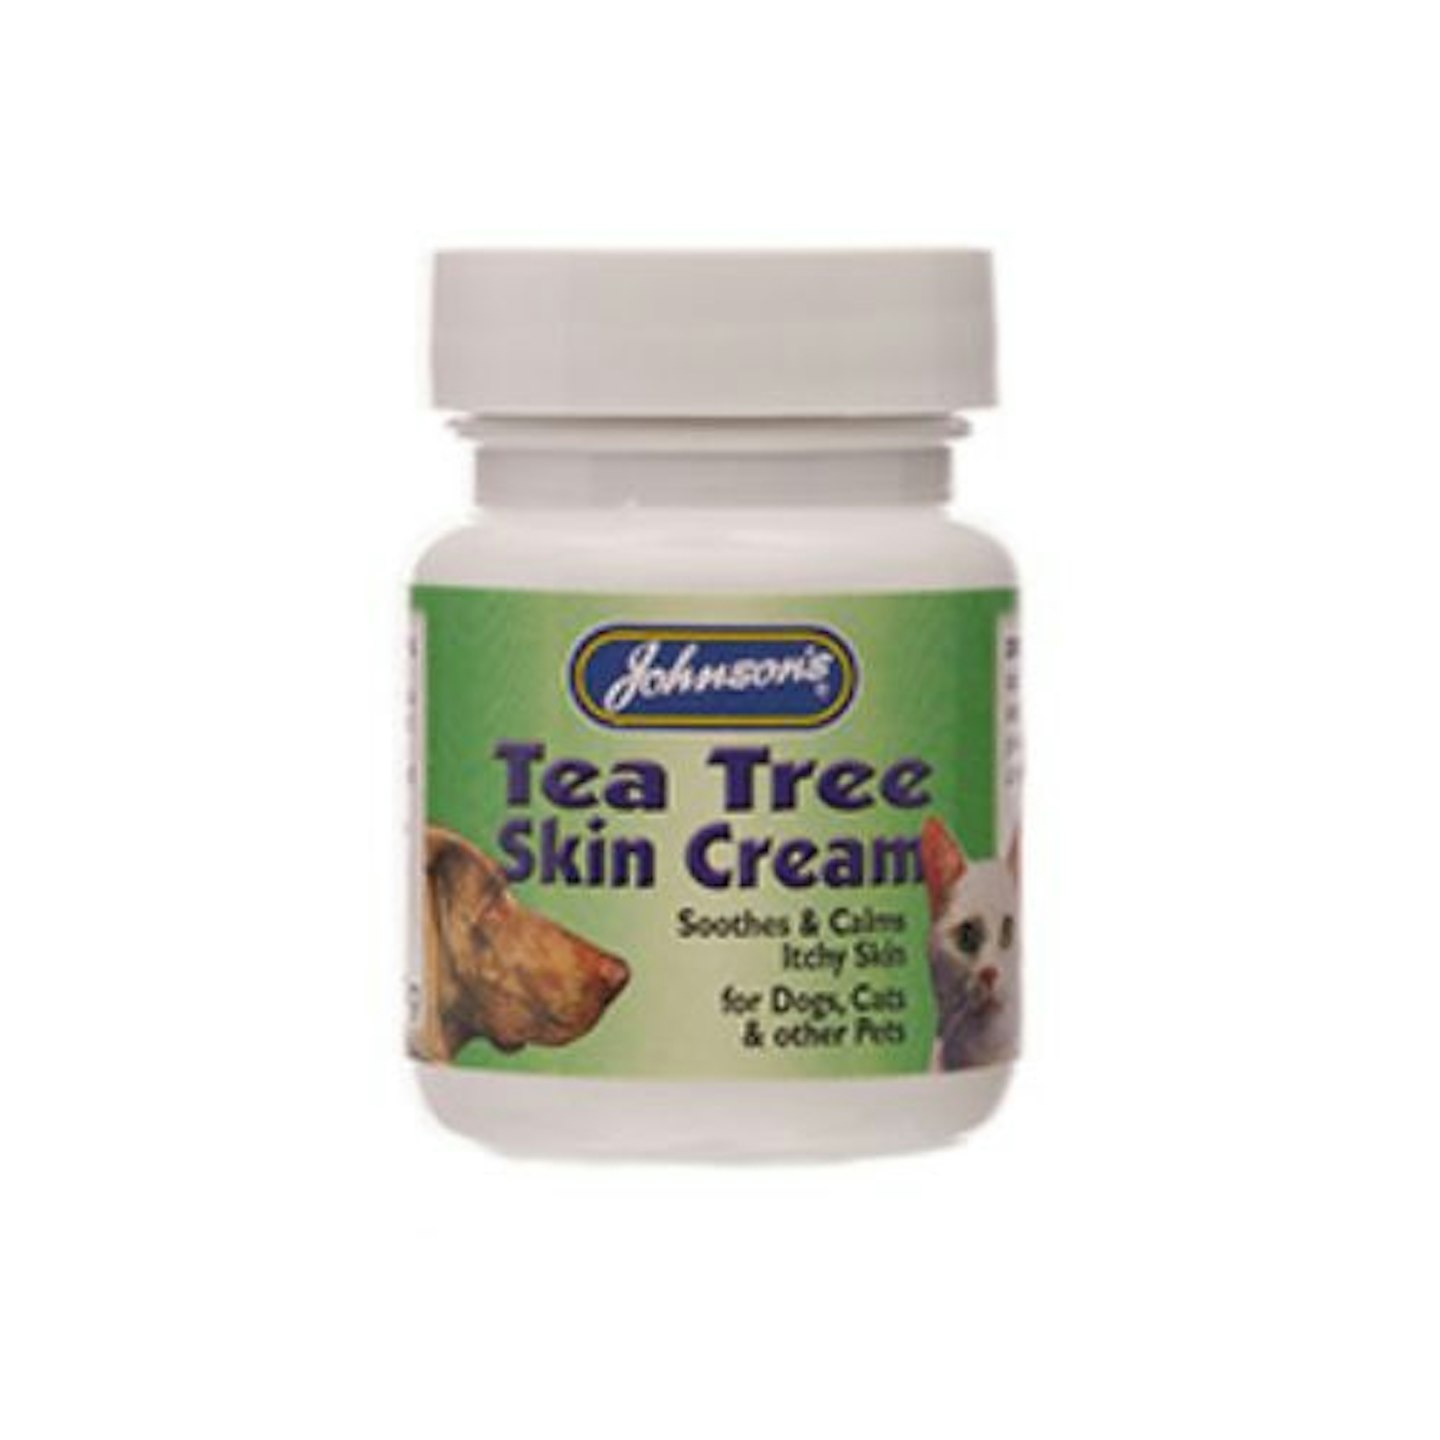 Johnsons Tea Tree Skin Cream For Dogs & Cats